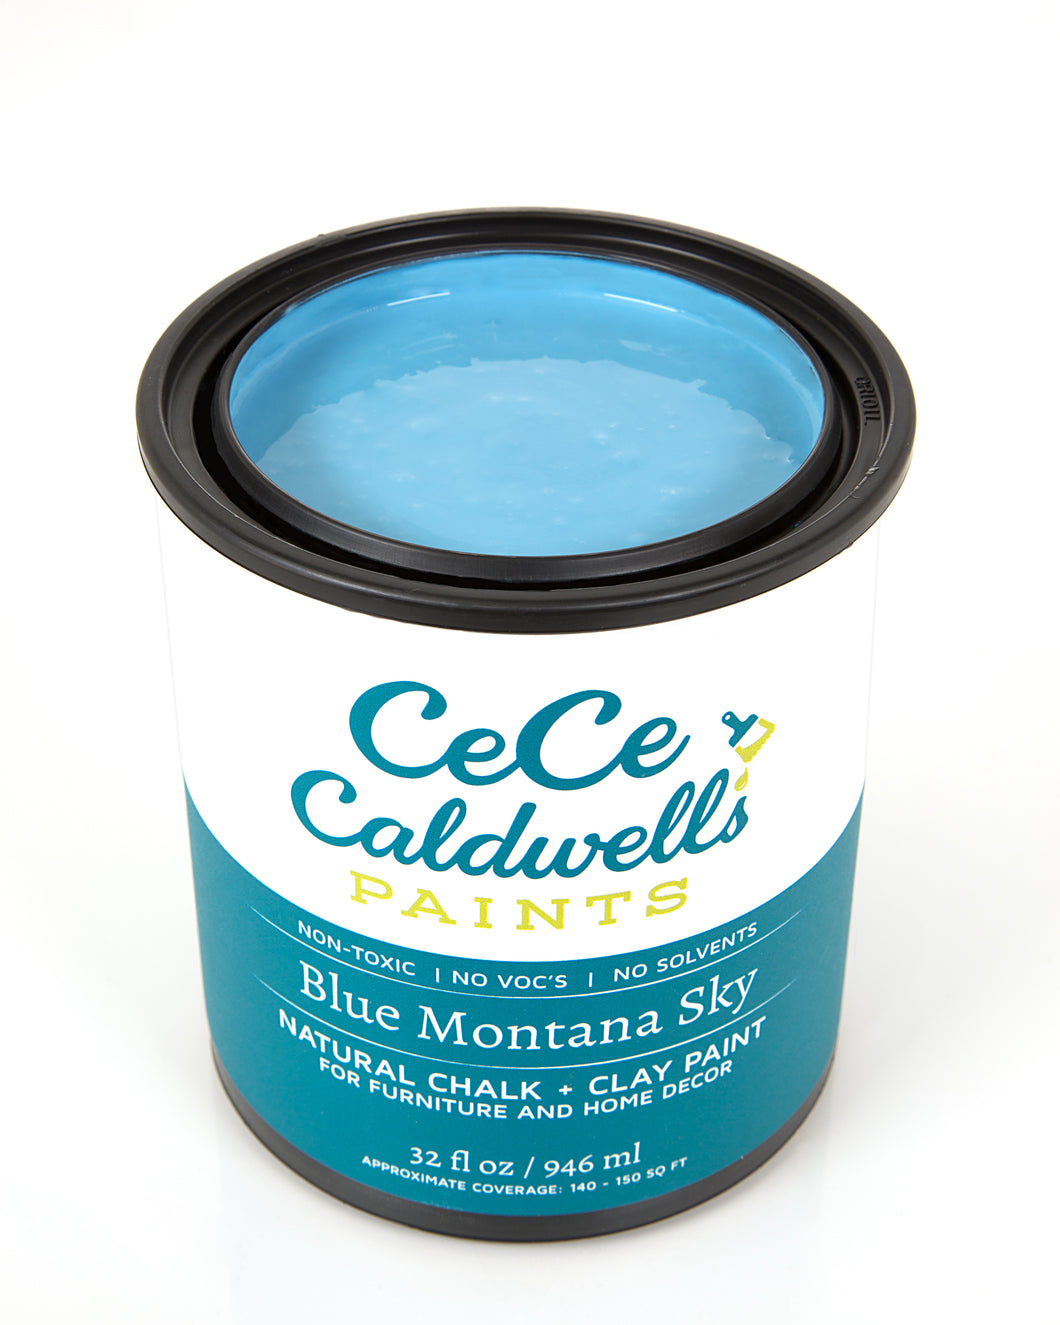 CeCe Caldwell's Blue Montana Sky